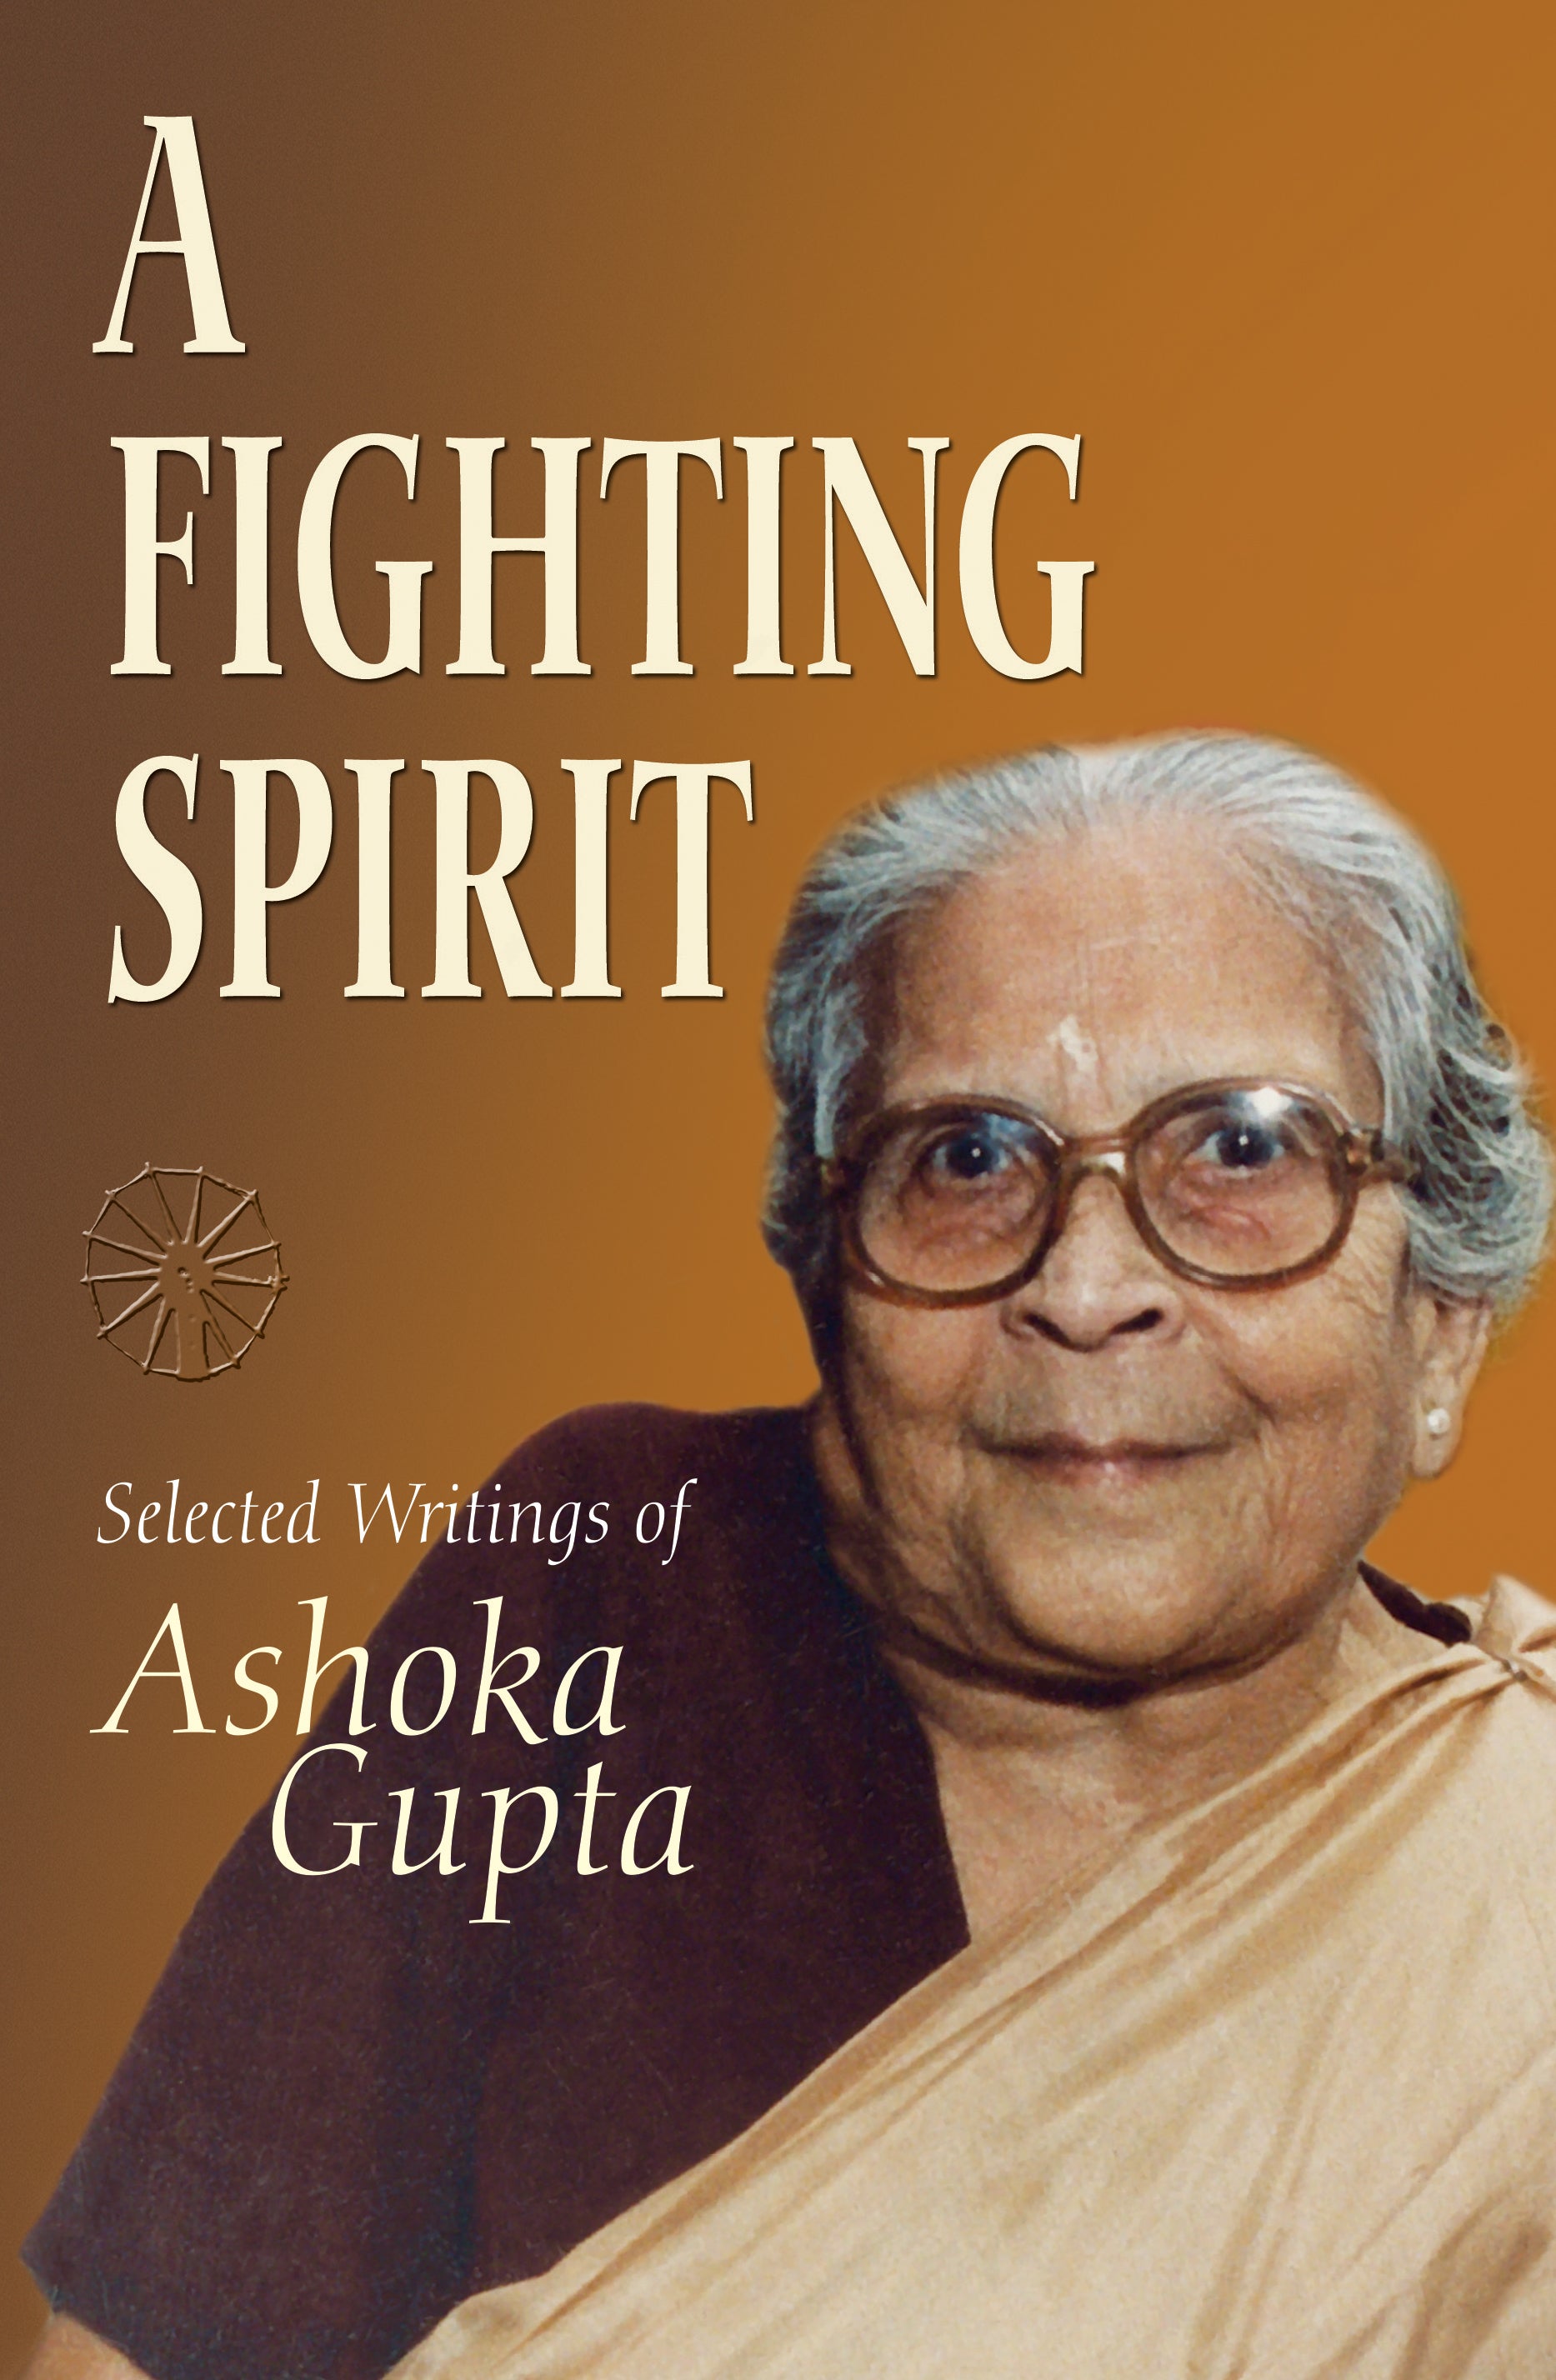 A Fighting Spirit: Selected Writings of Ashoka Gupta